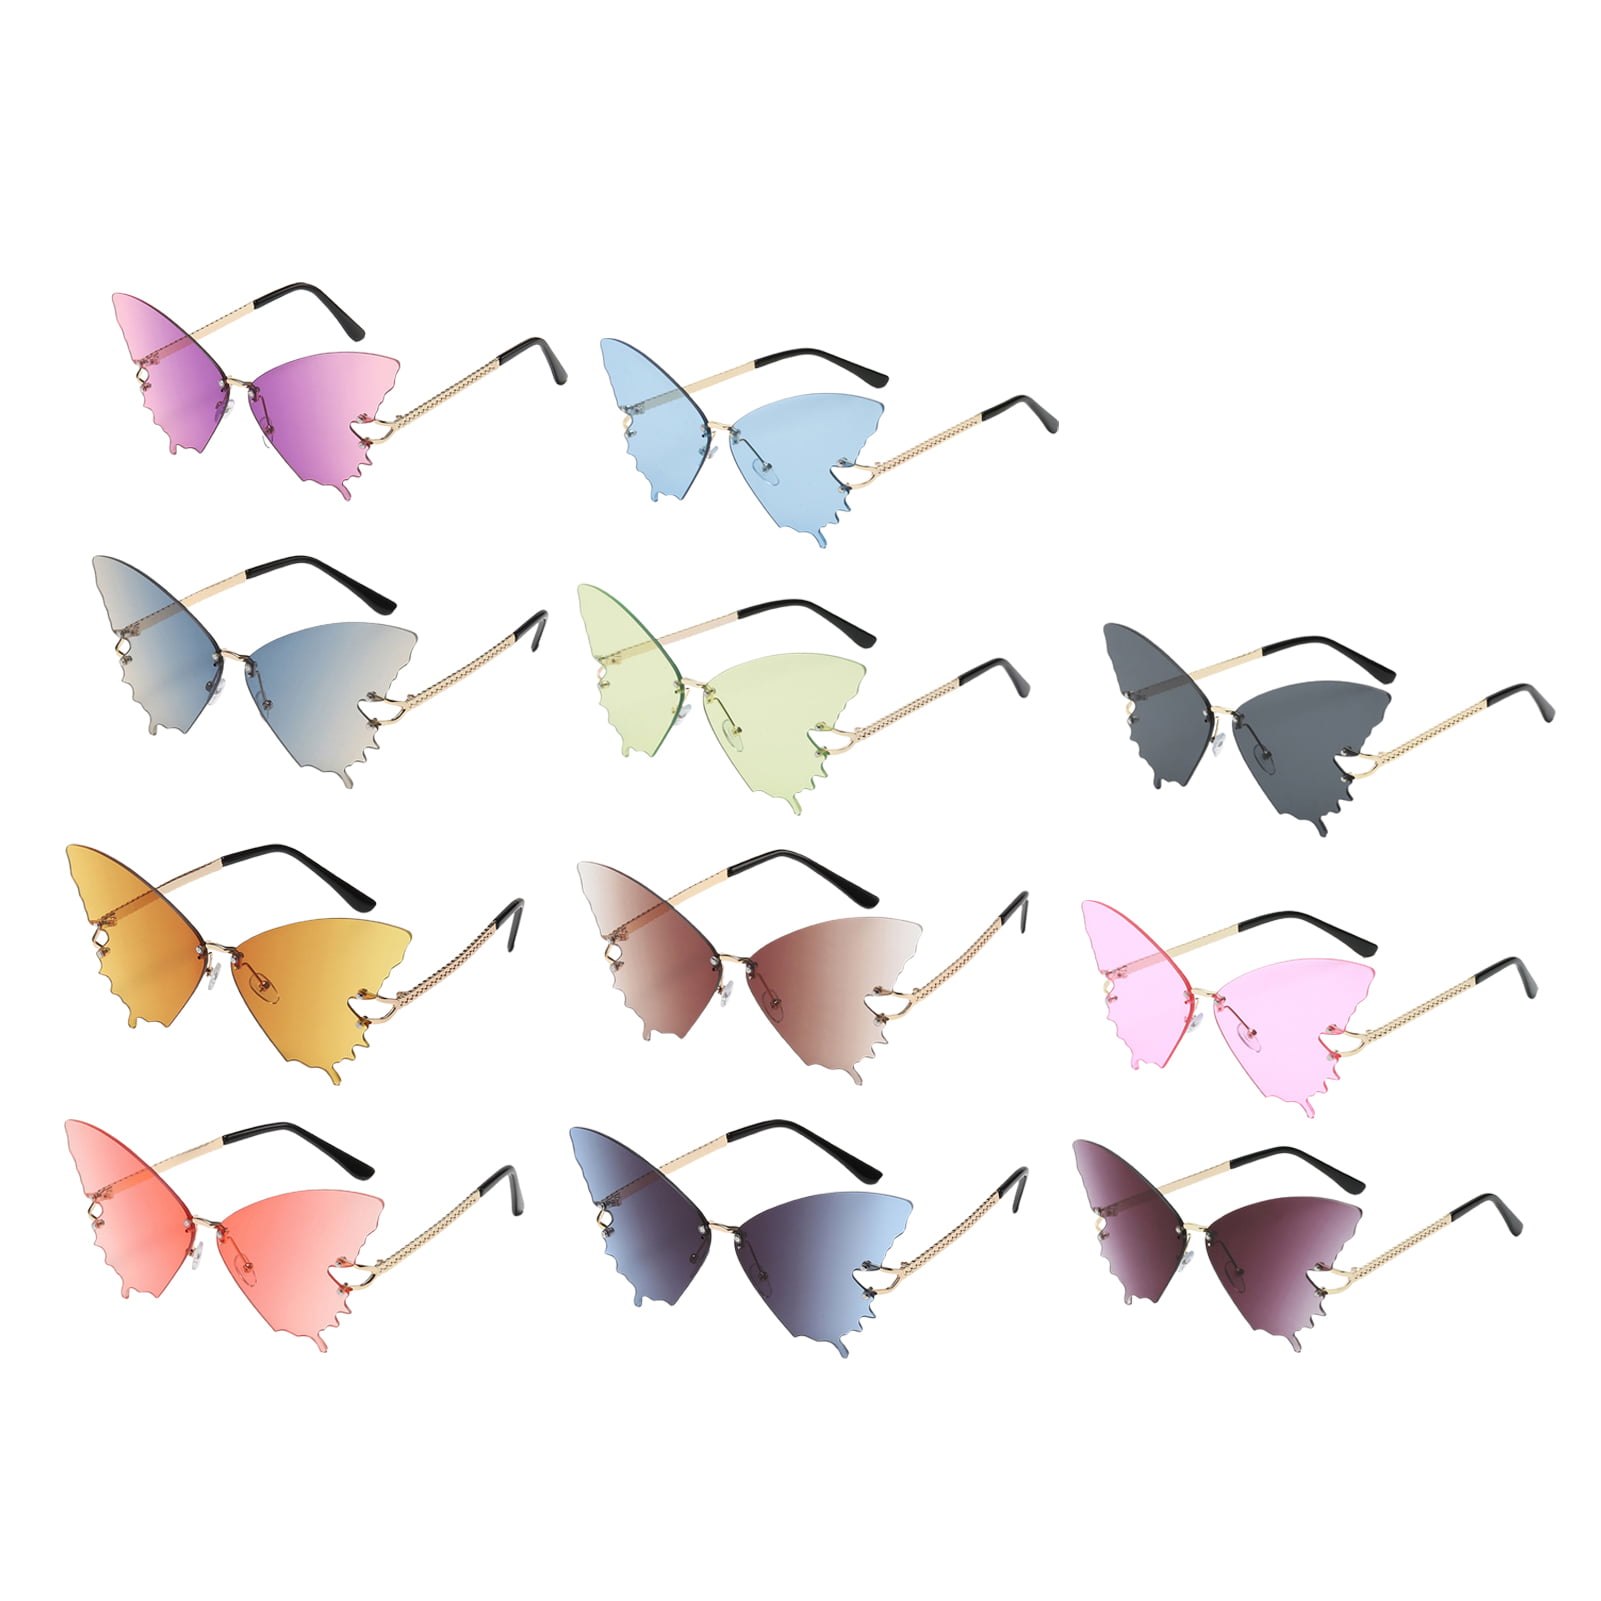 Harmtty Women's Butterflies Shape Rimless Sunglasses